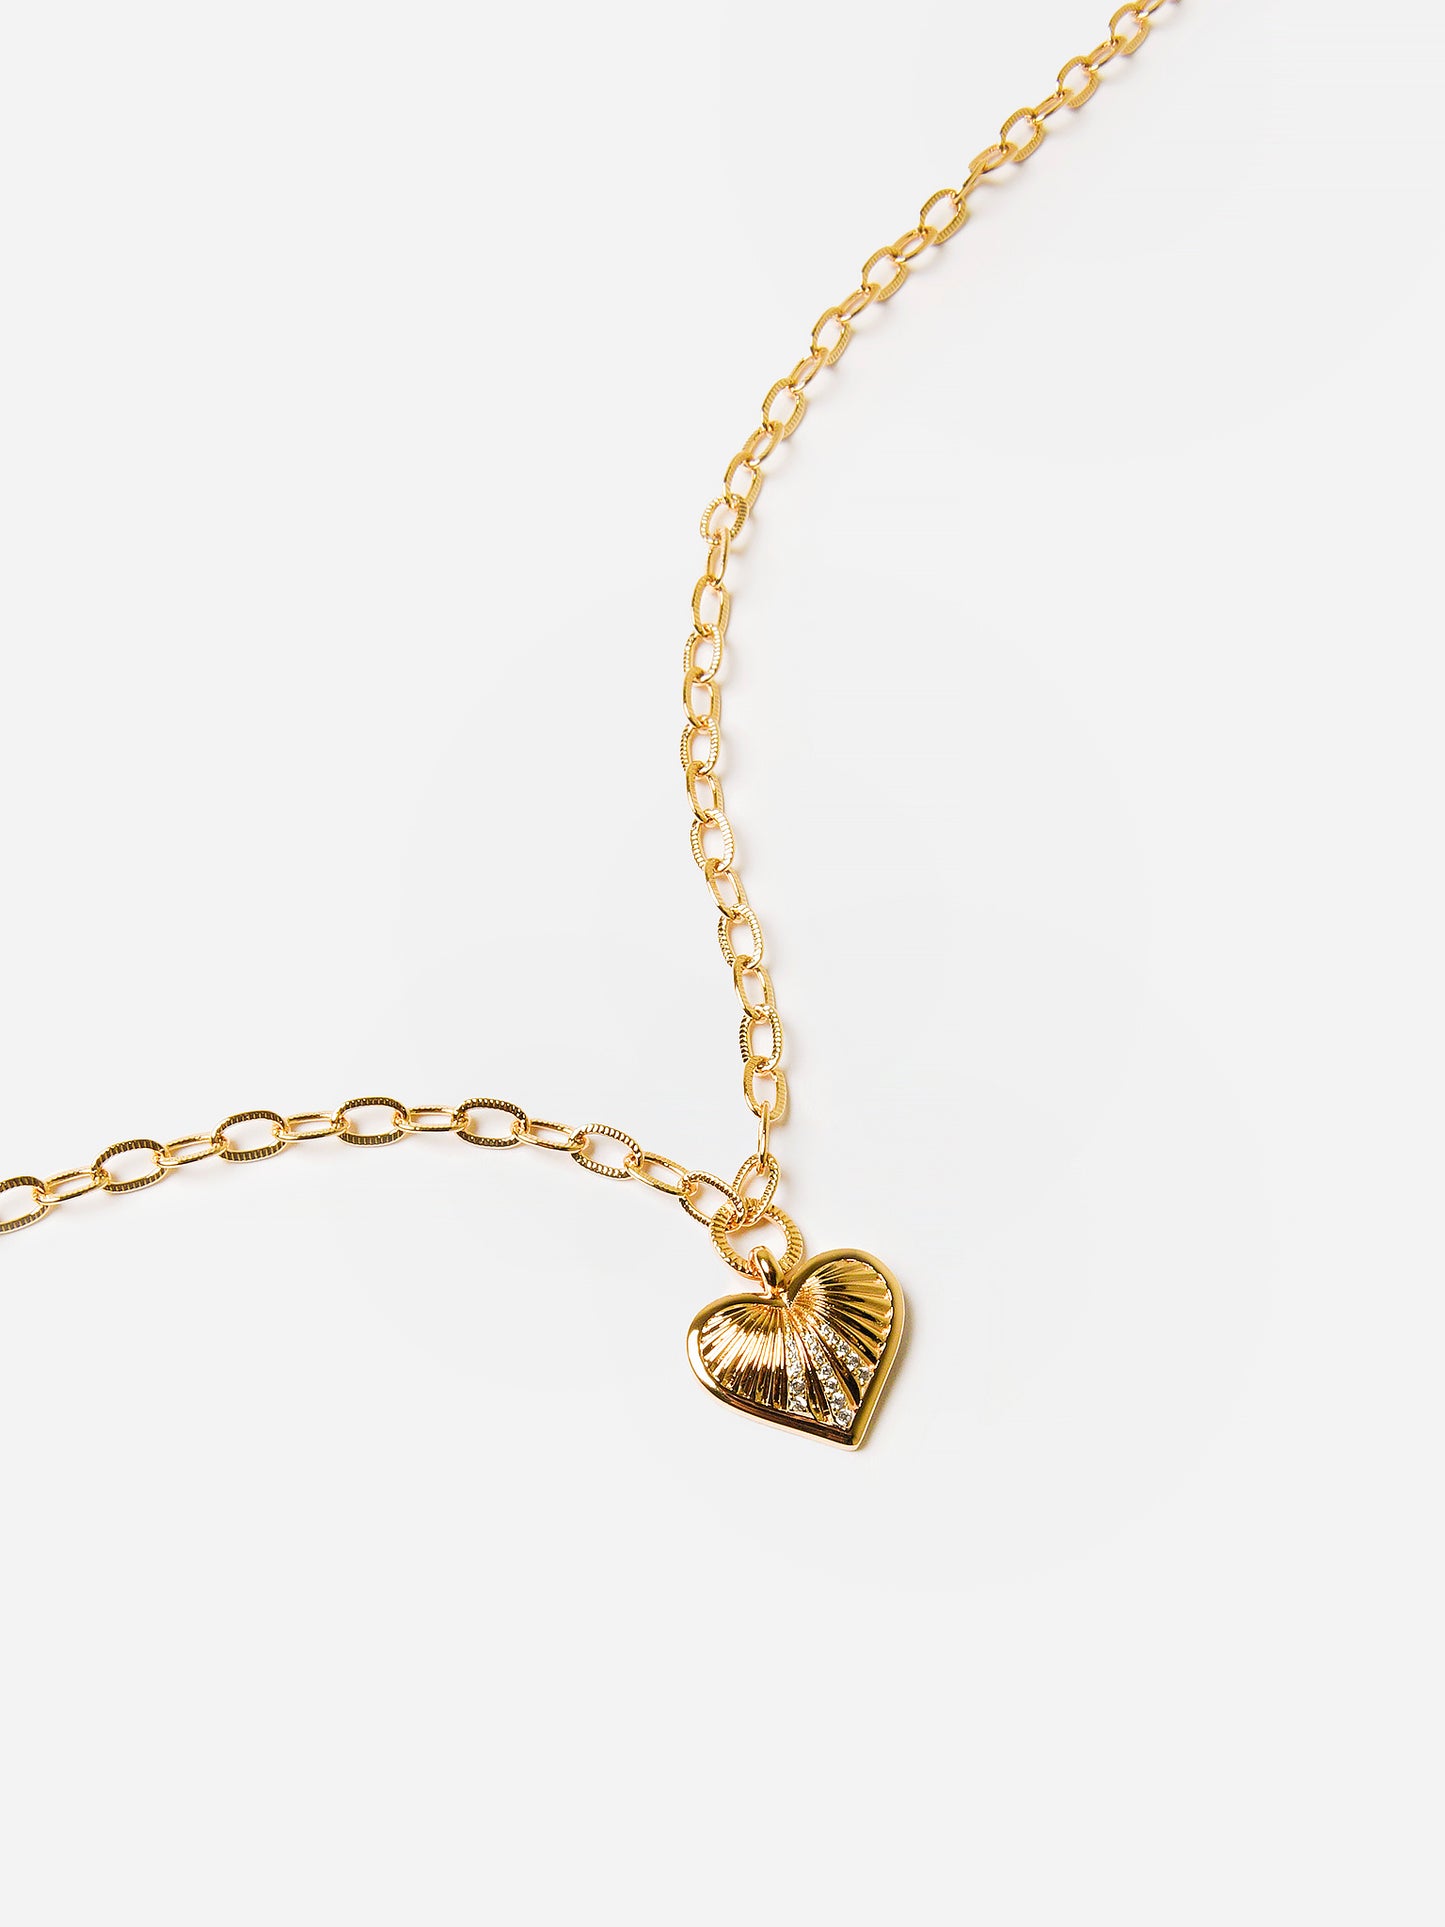 Leeada Jewelry Women's Venus Heart Chain Necklace